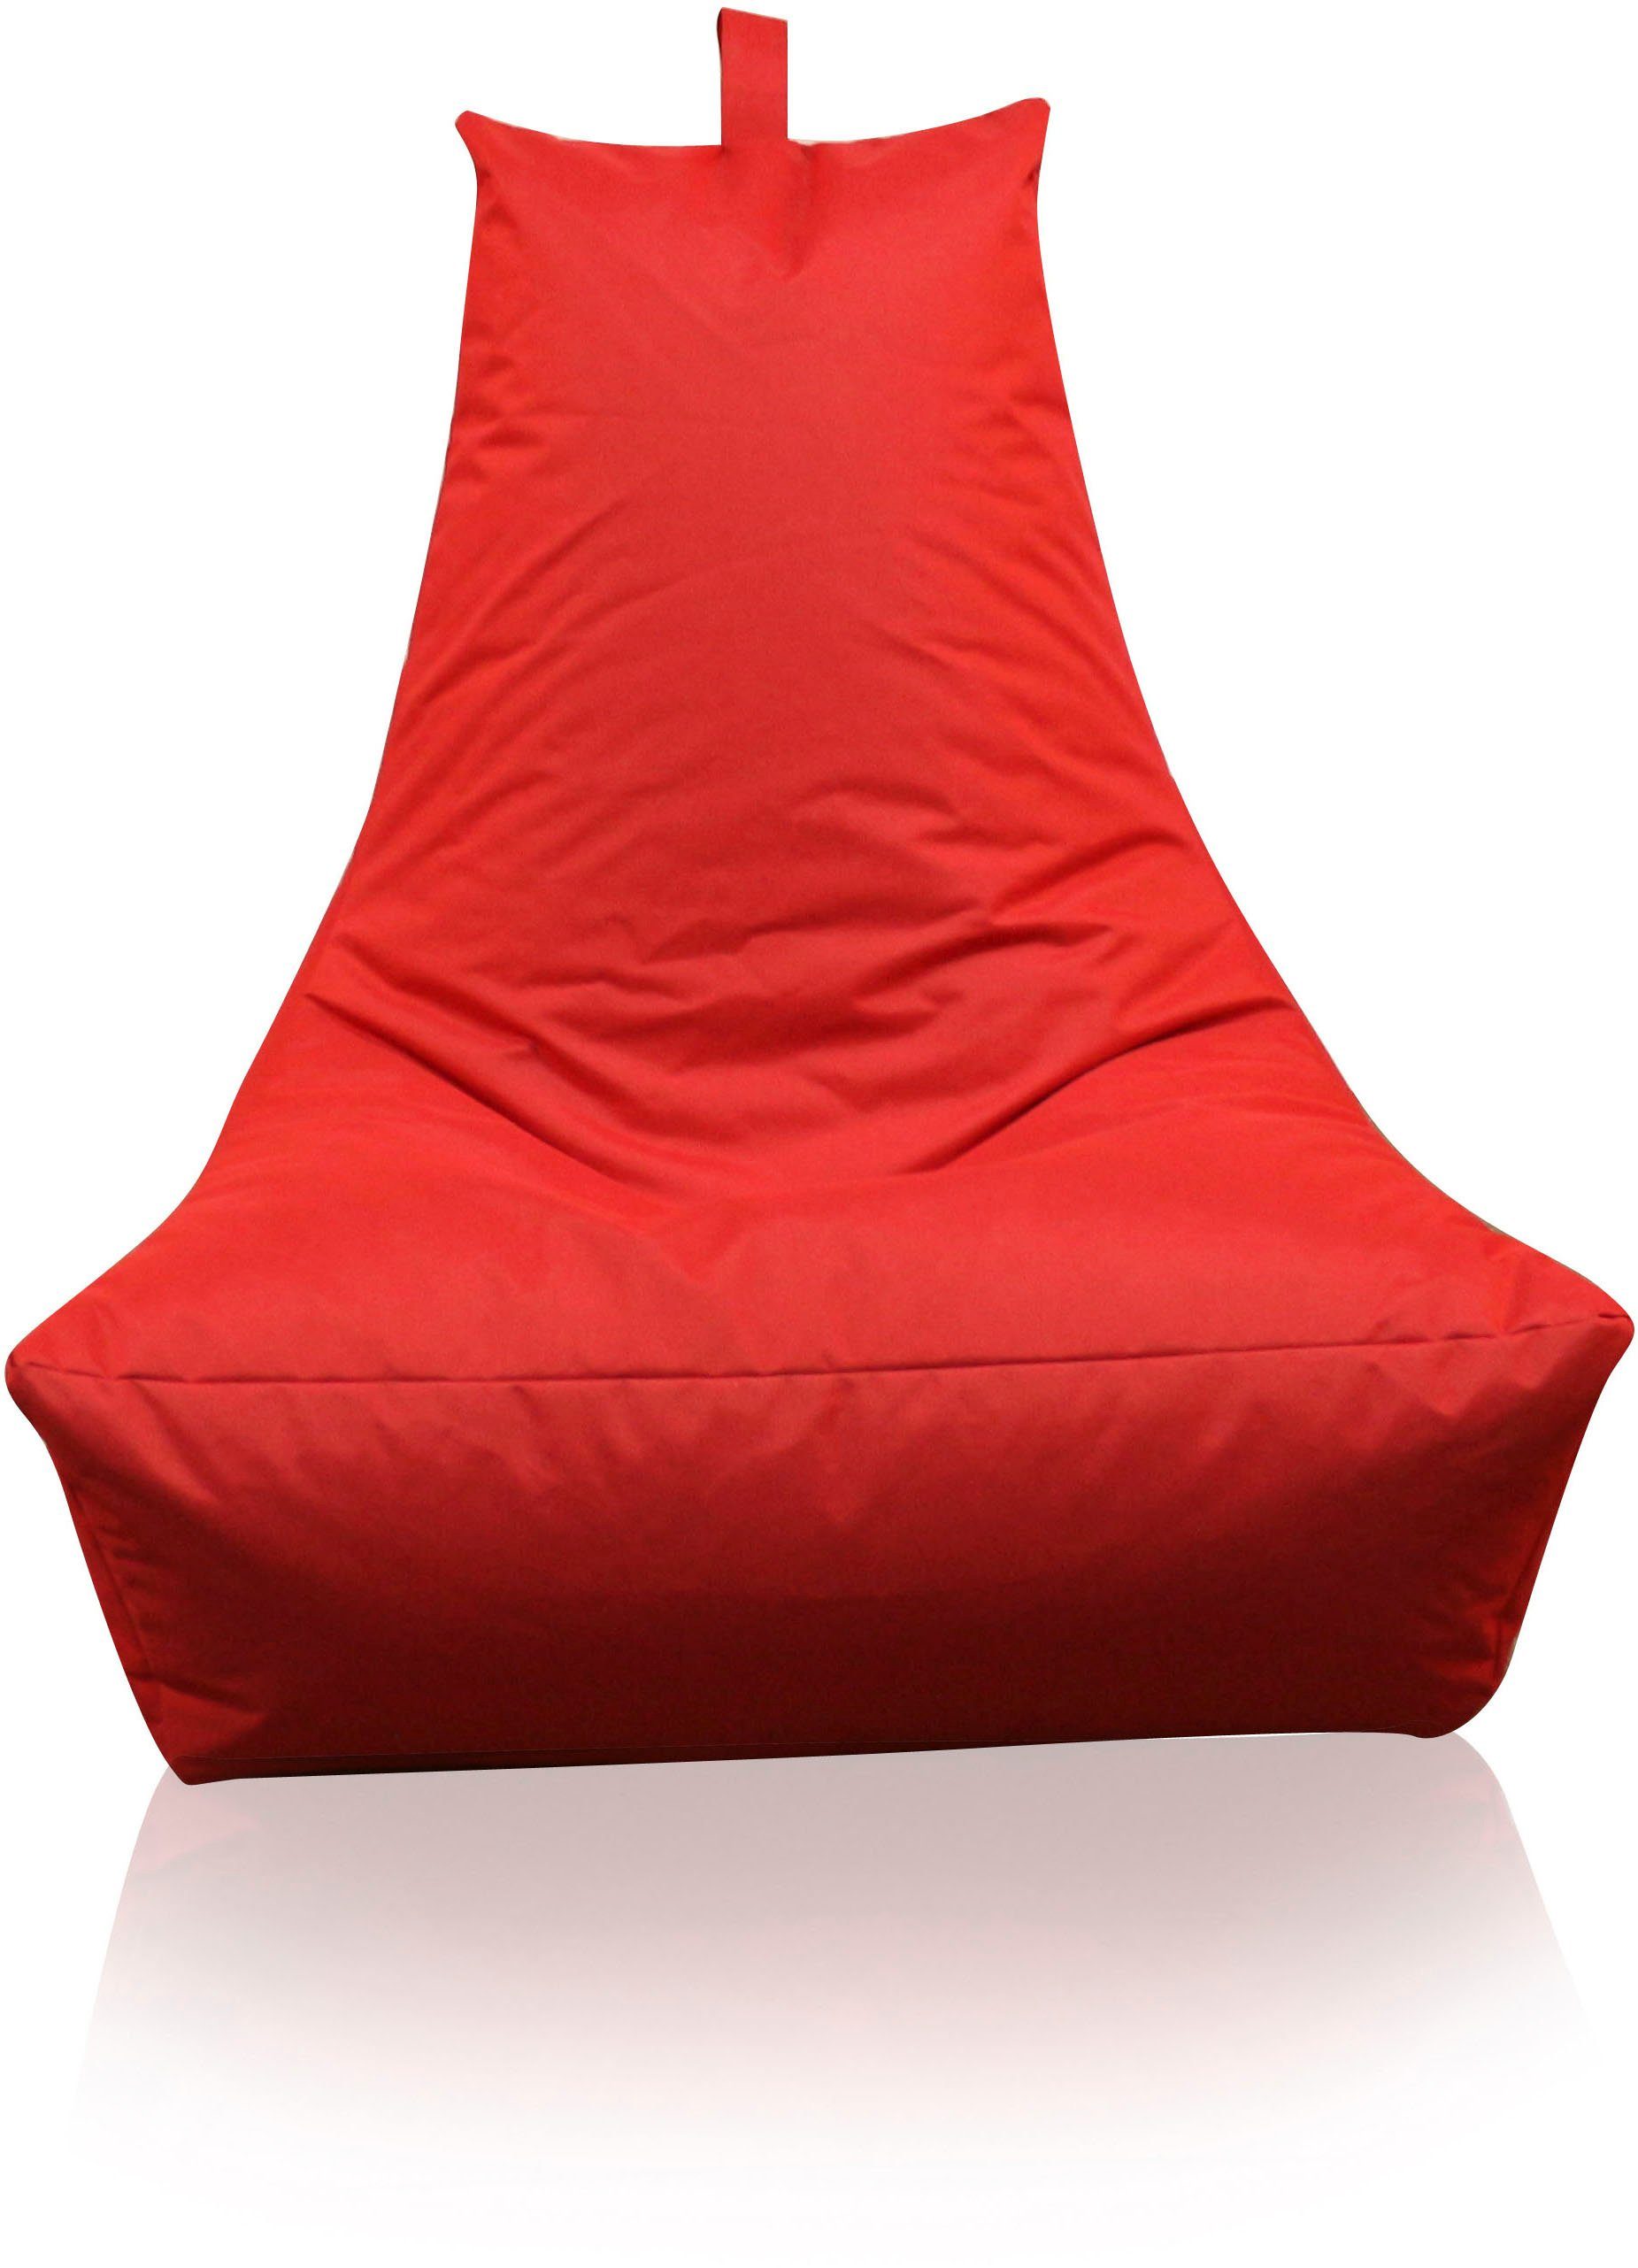 KiNZLER Sitzsack Lounge (1 St) rot | Sitzsäcke